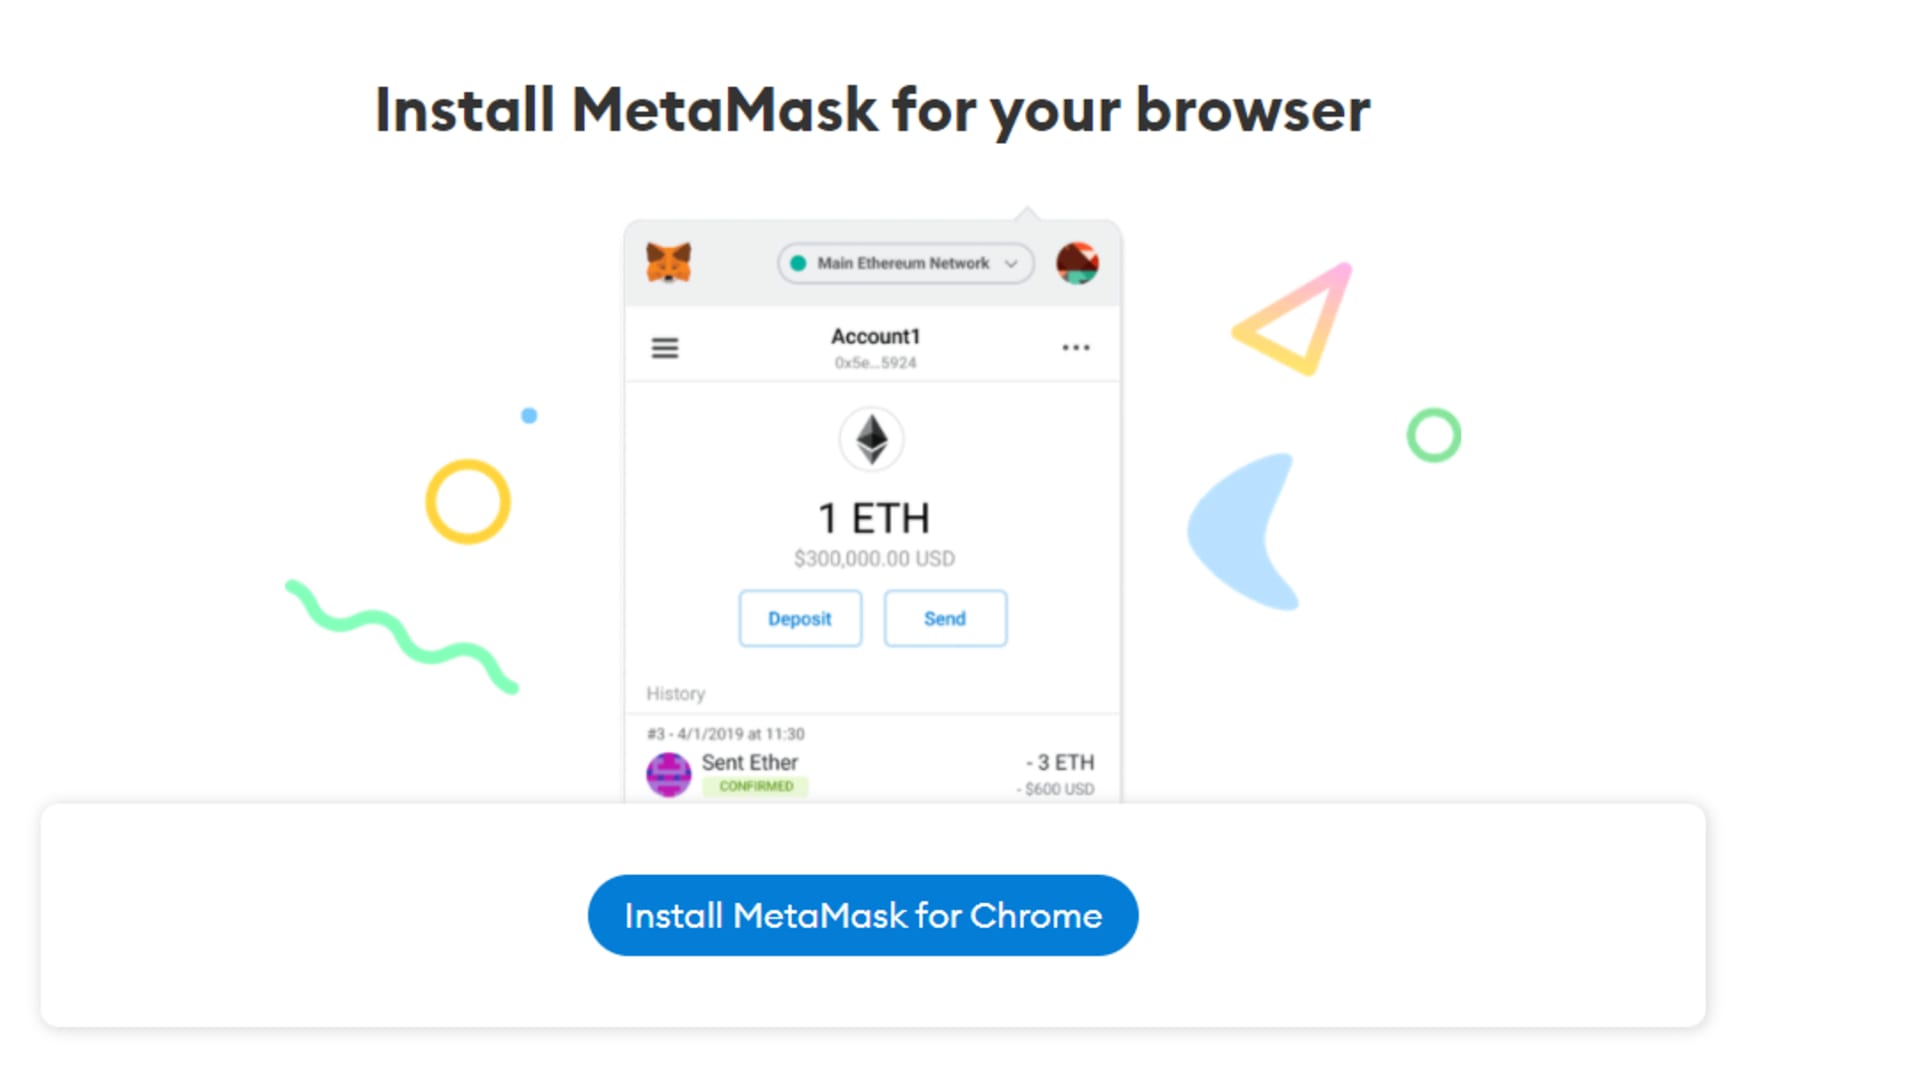 Installing the MetaMask digital wallet in Chrome.